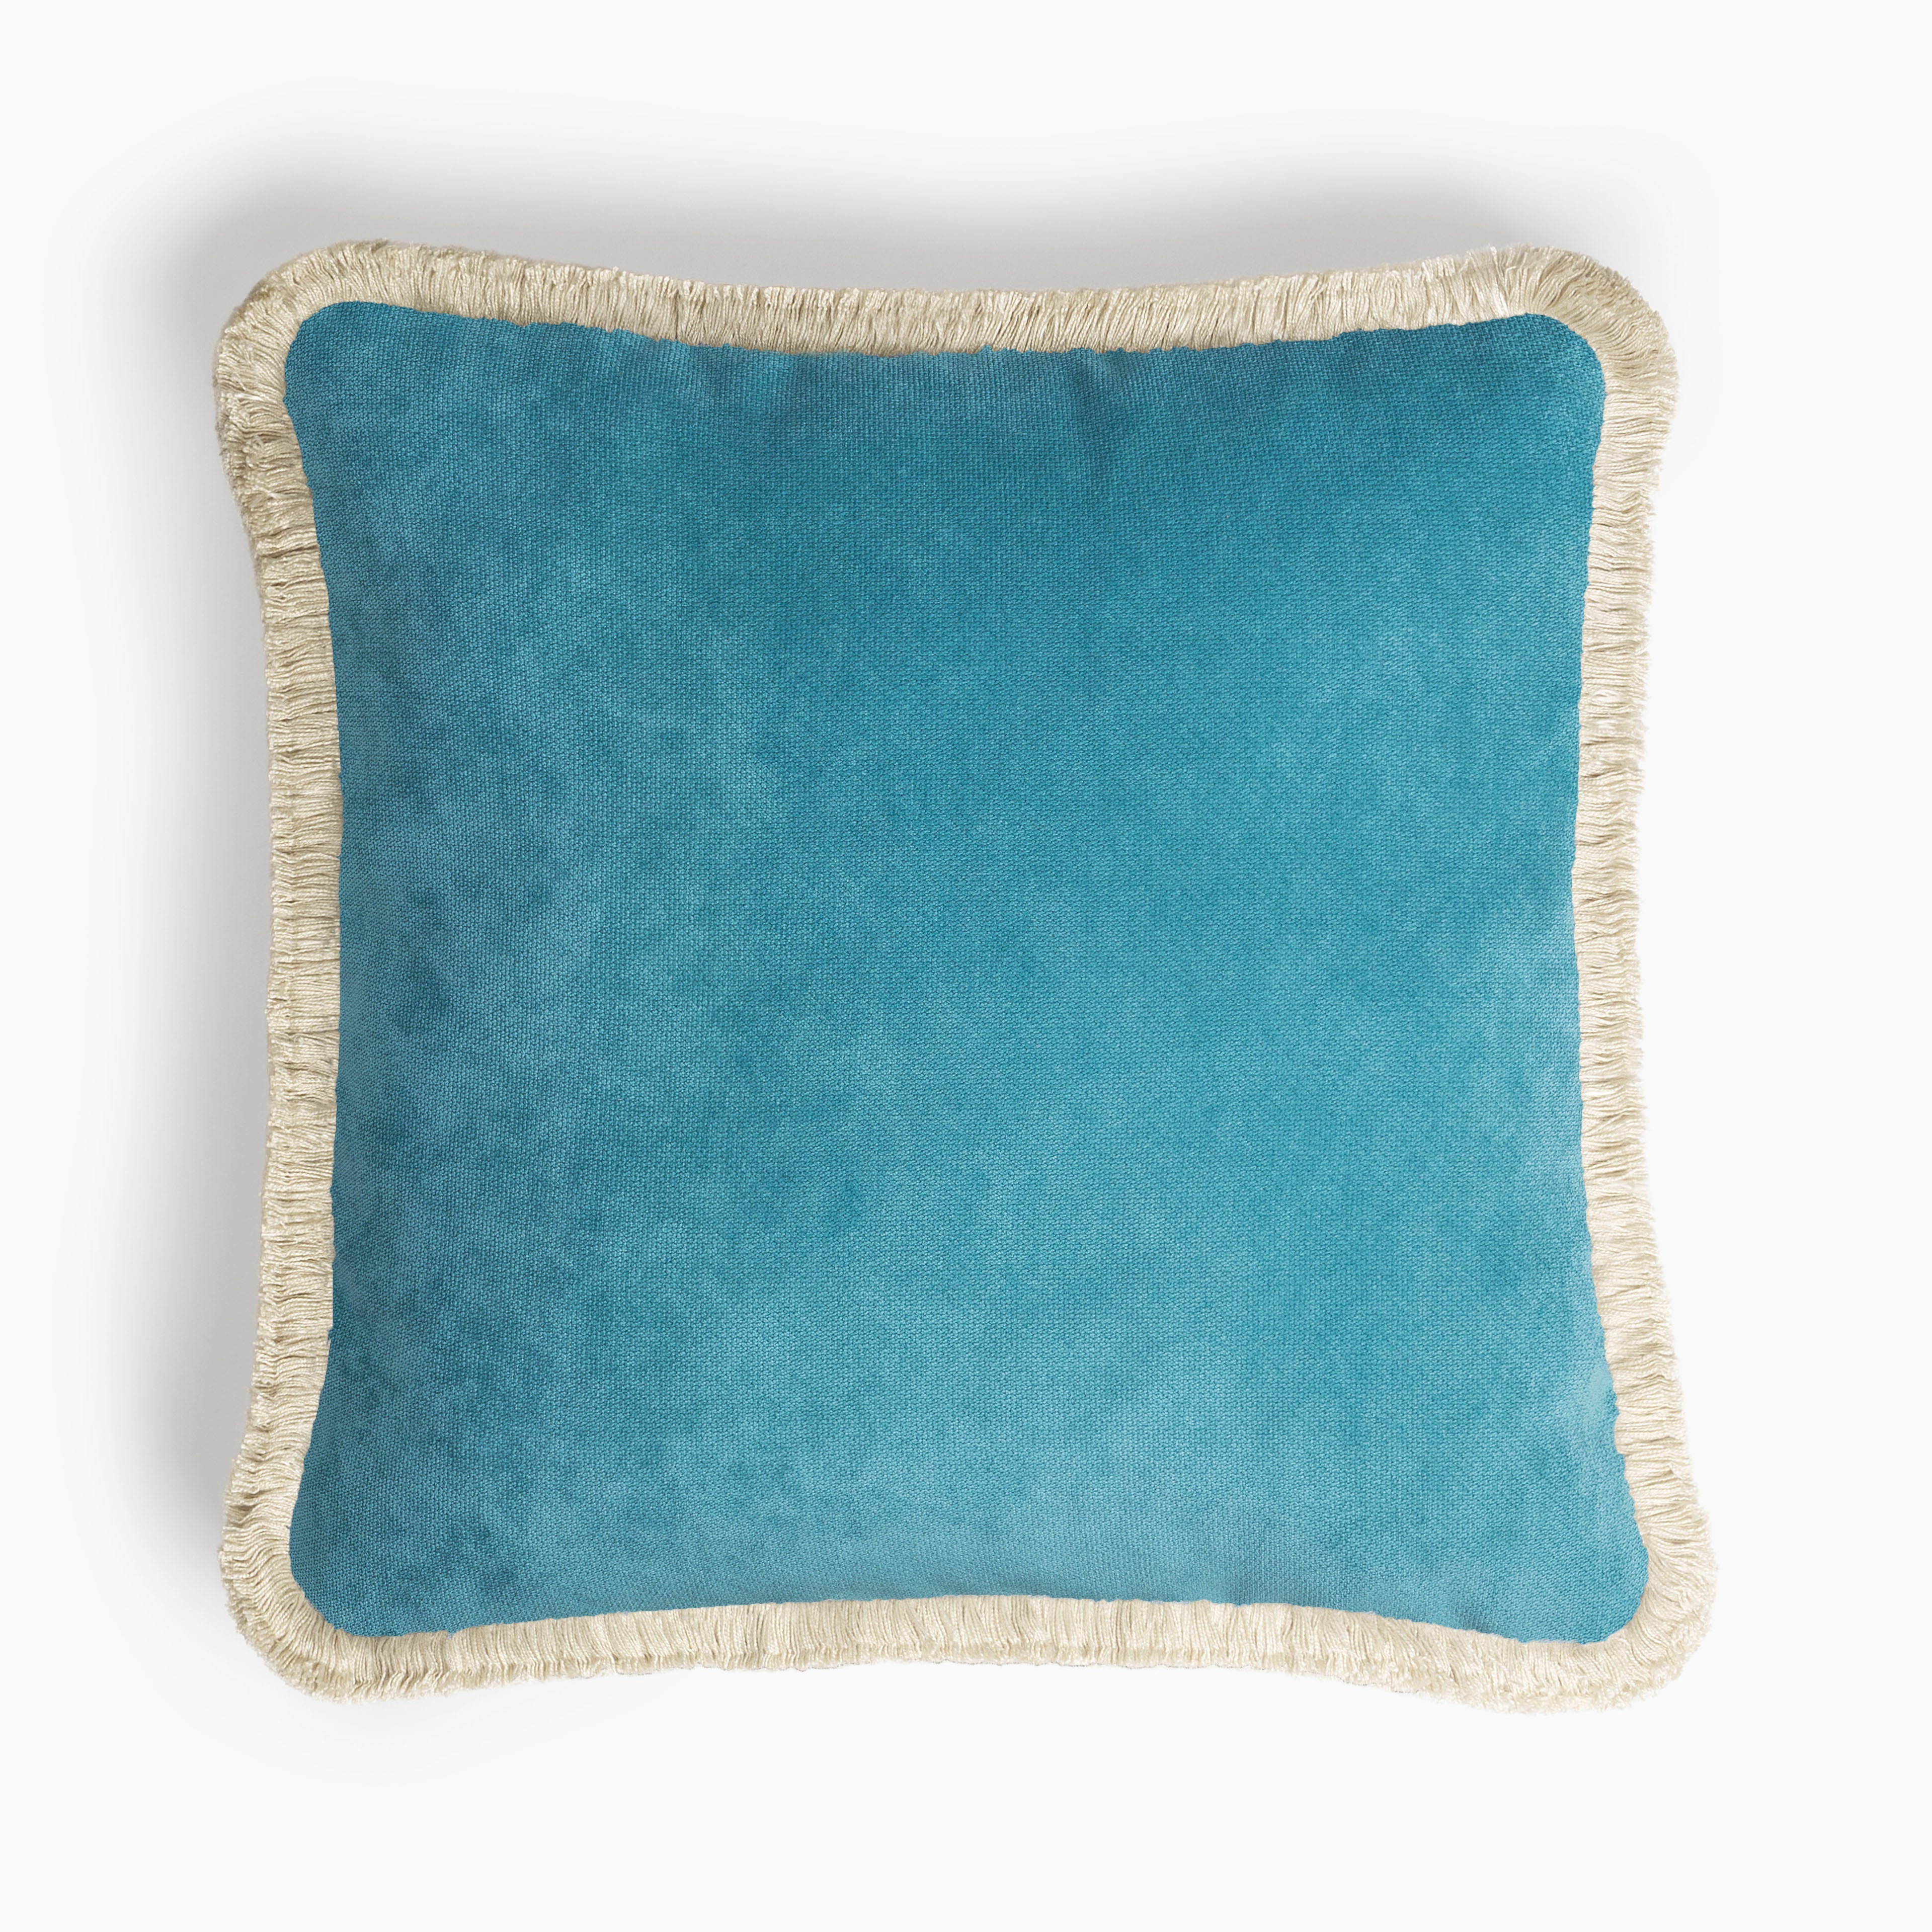 Lo Decor Velvet Turquoise Pillow with Cream Fringes